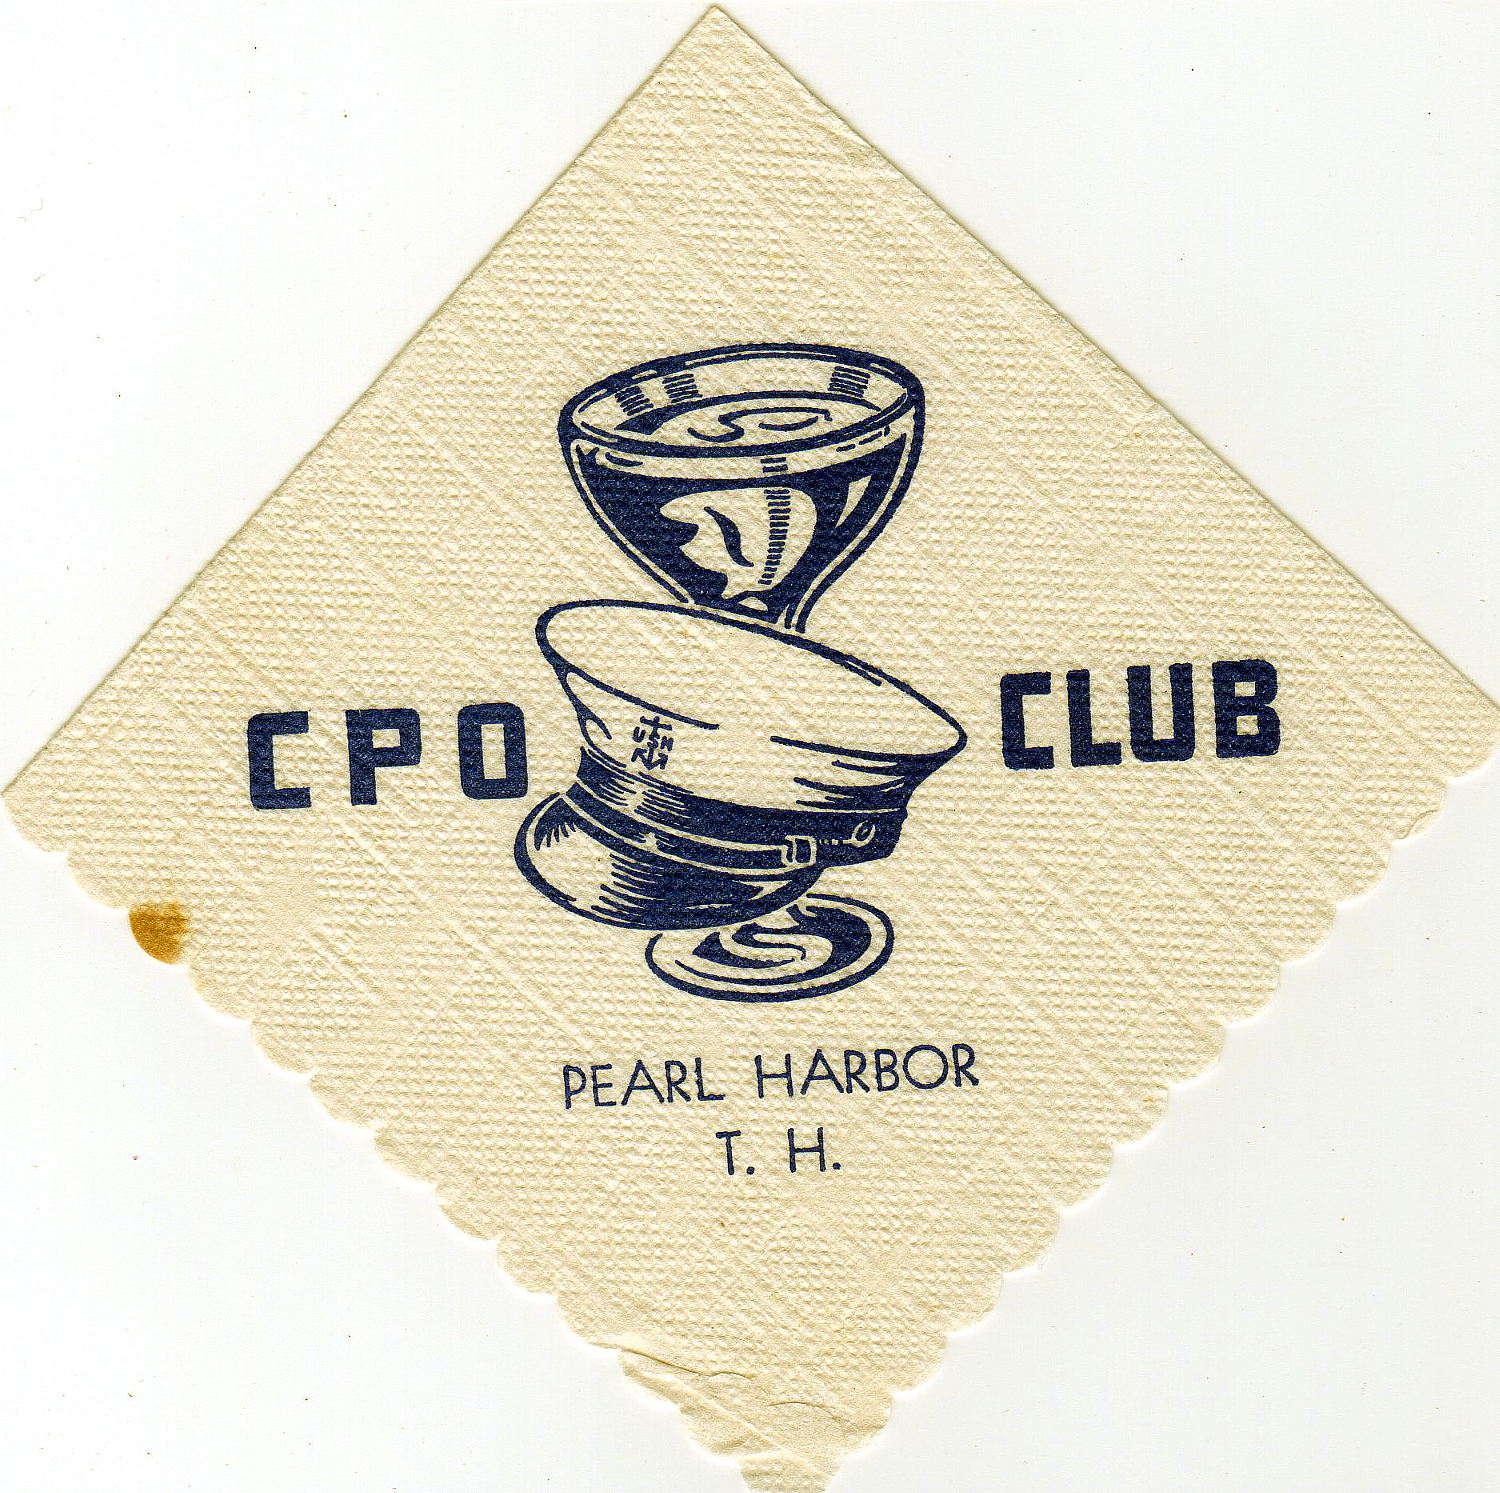 Royal Canadian Navy : CPO Club, Pearl Harbor